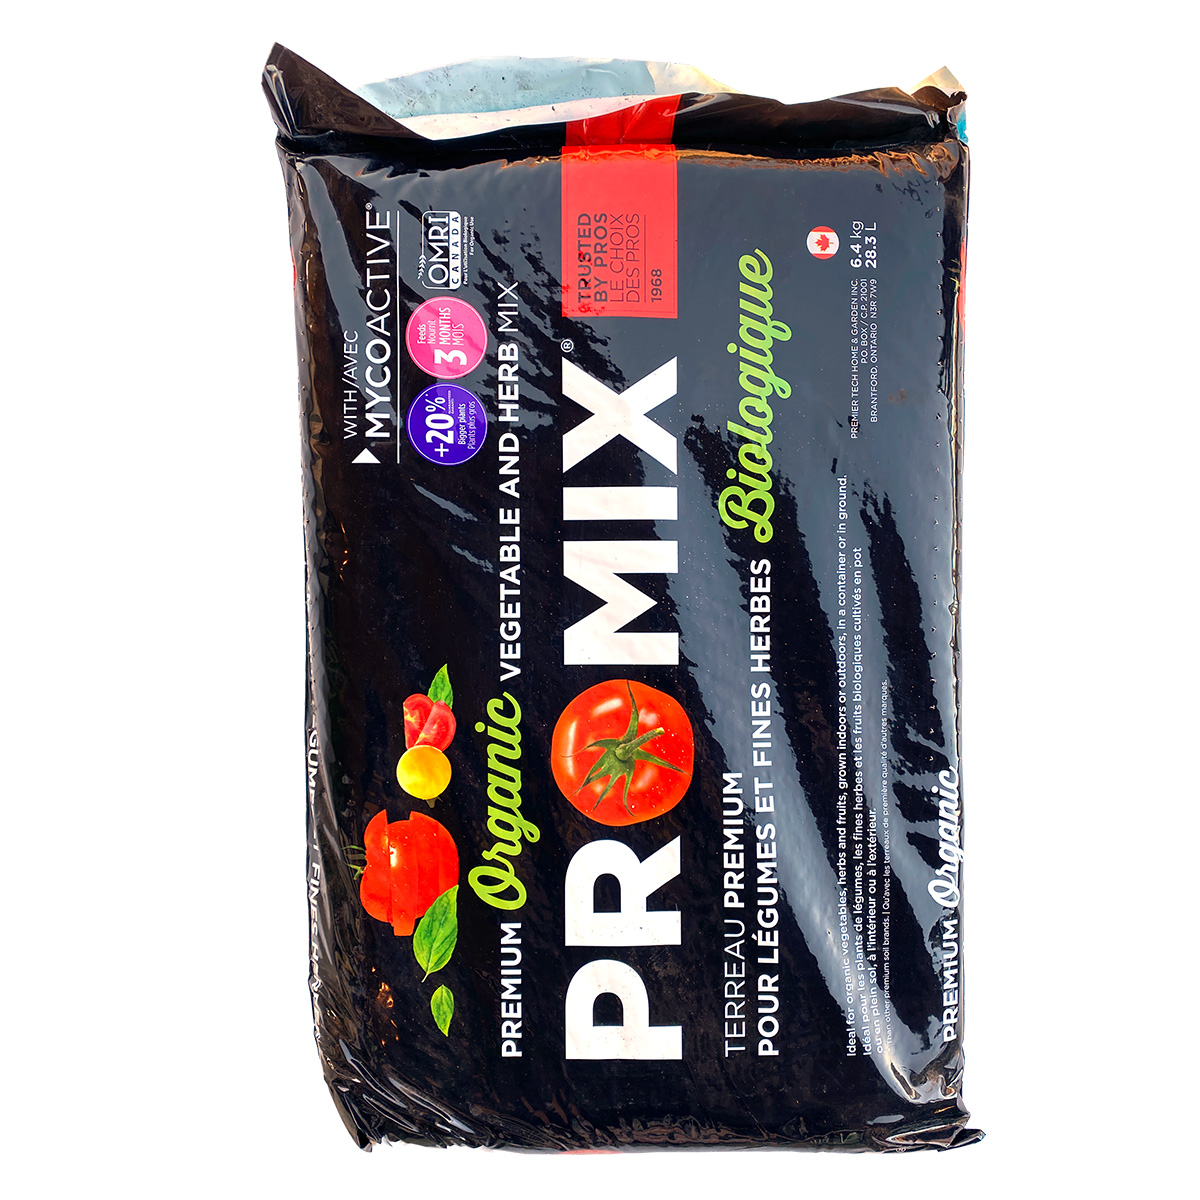 ProMix Premium Herb and Veg Potting Mix Soil